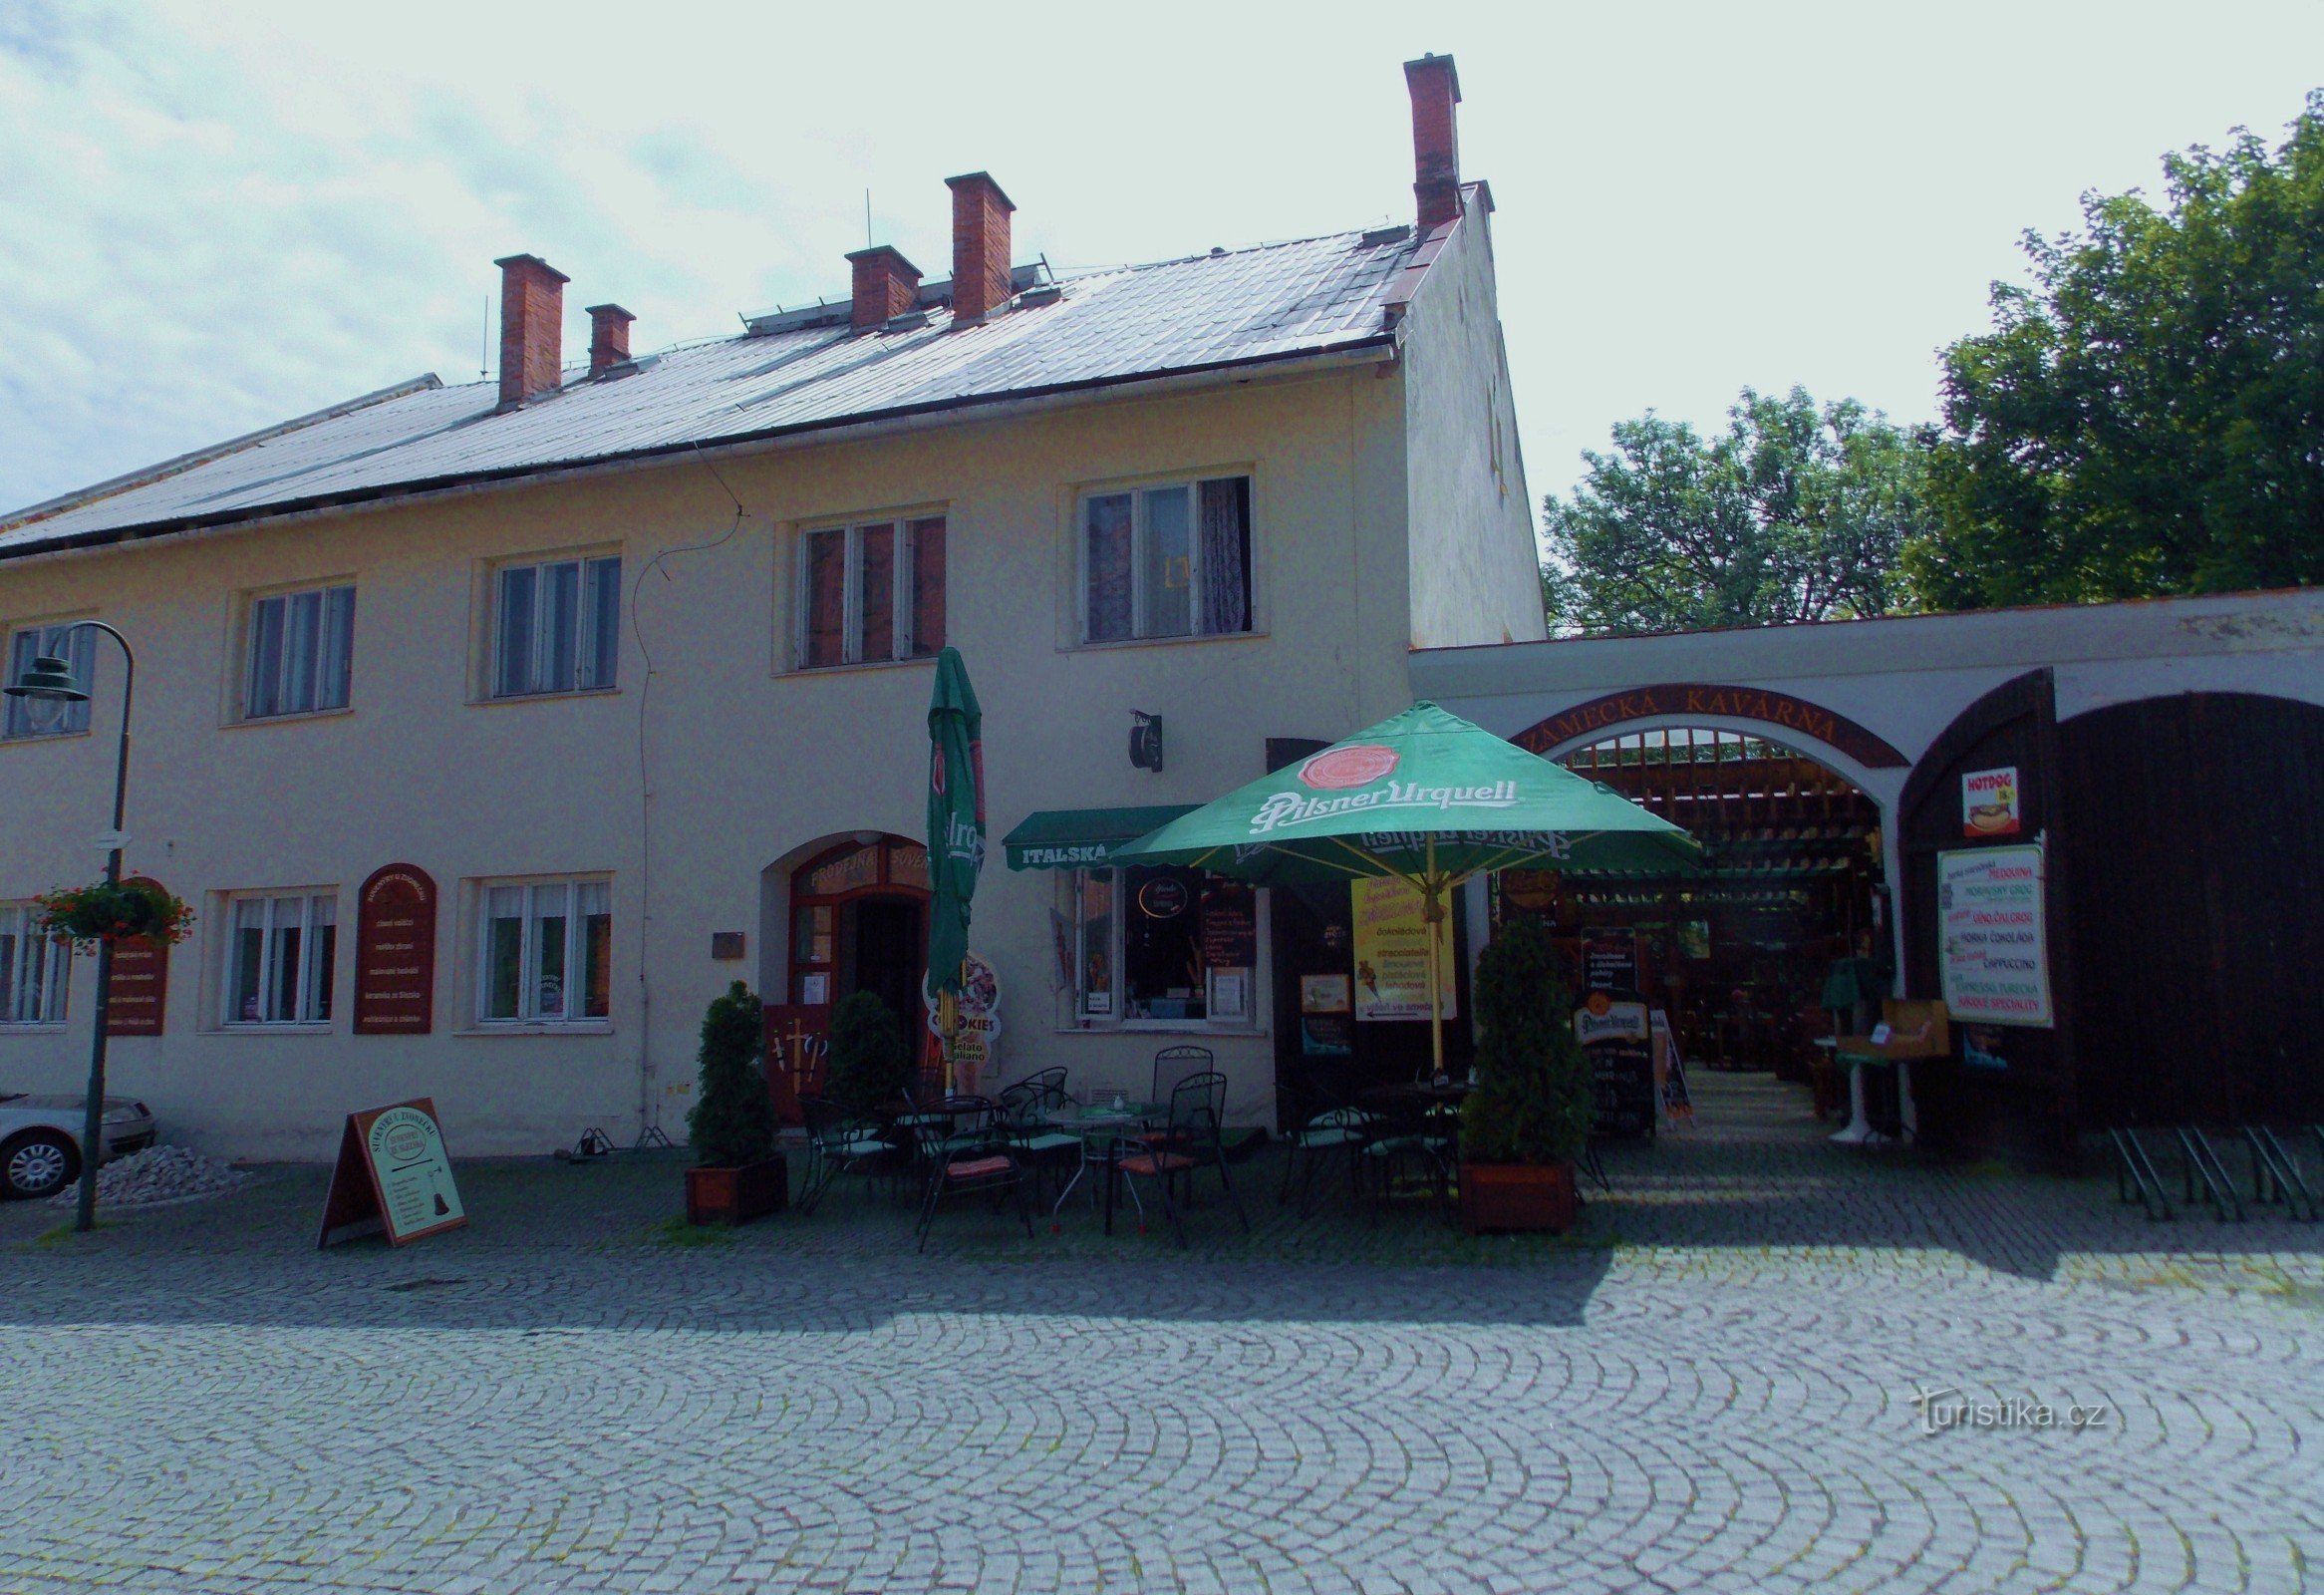 Castle cafe under the grounds of the castle in Hradec nad Moravicí